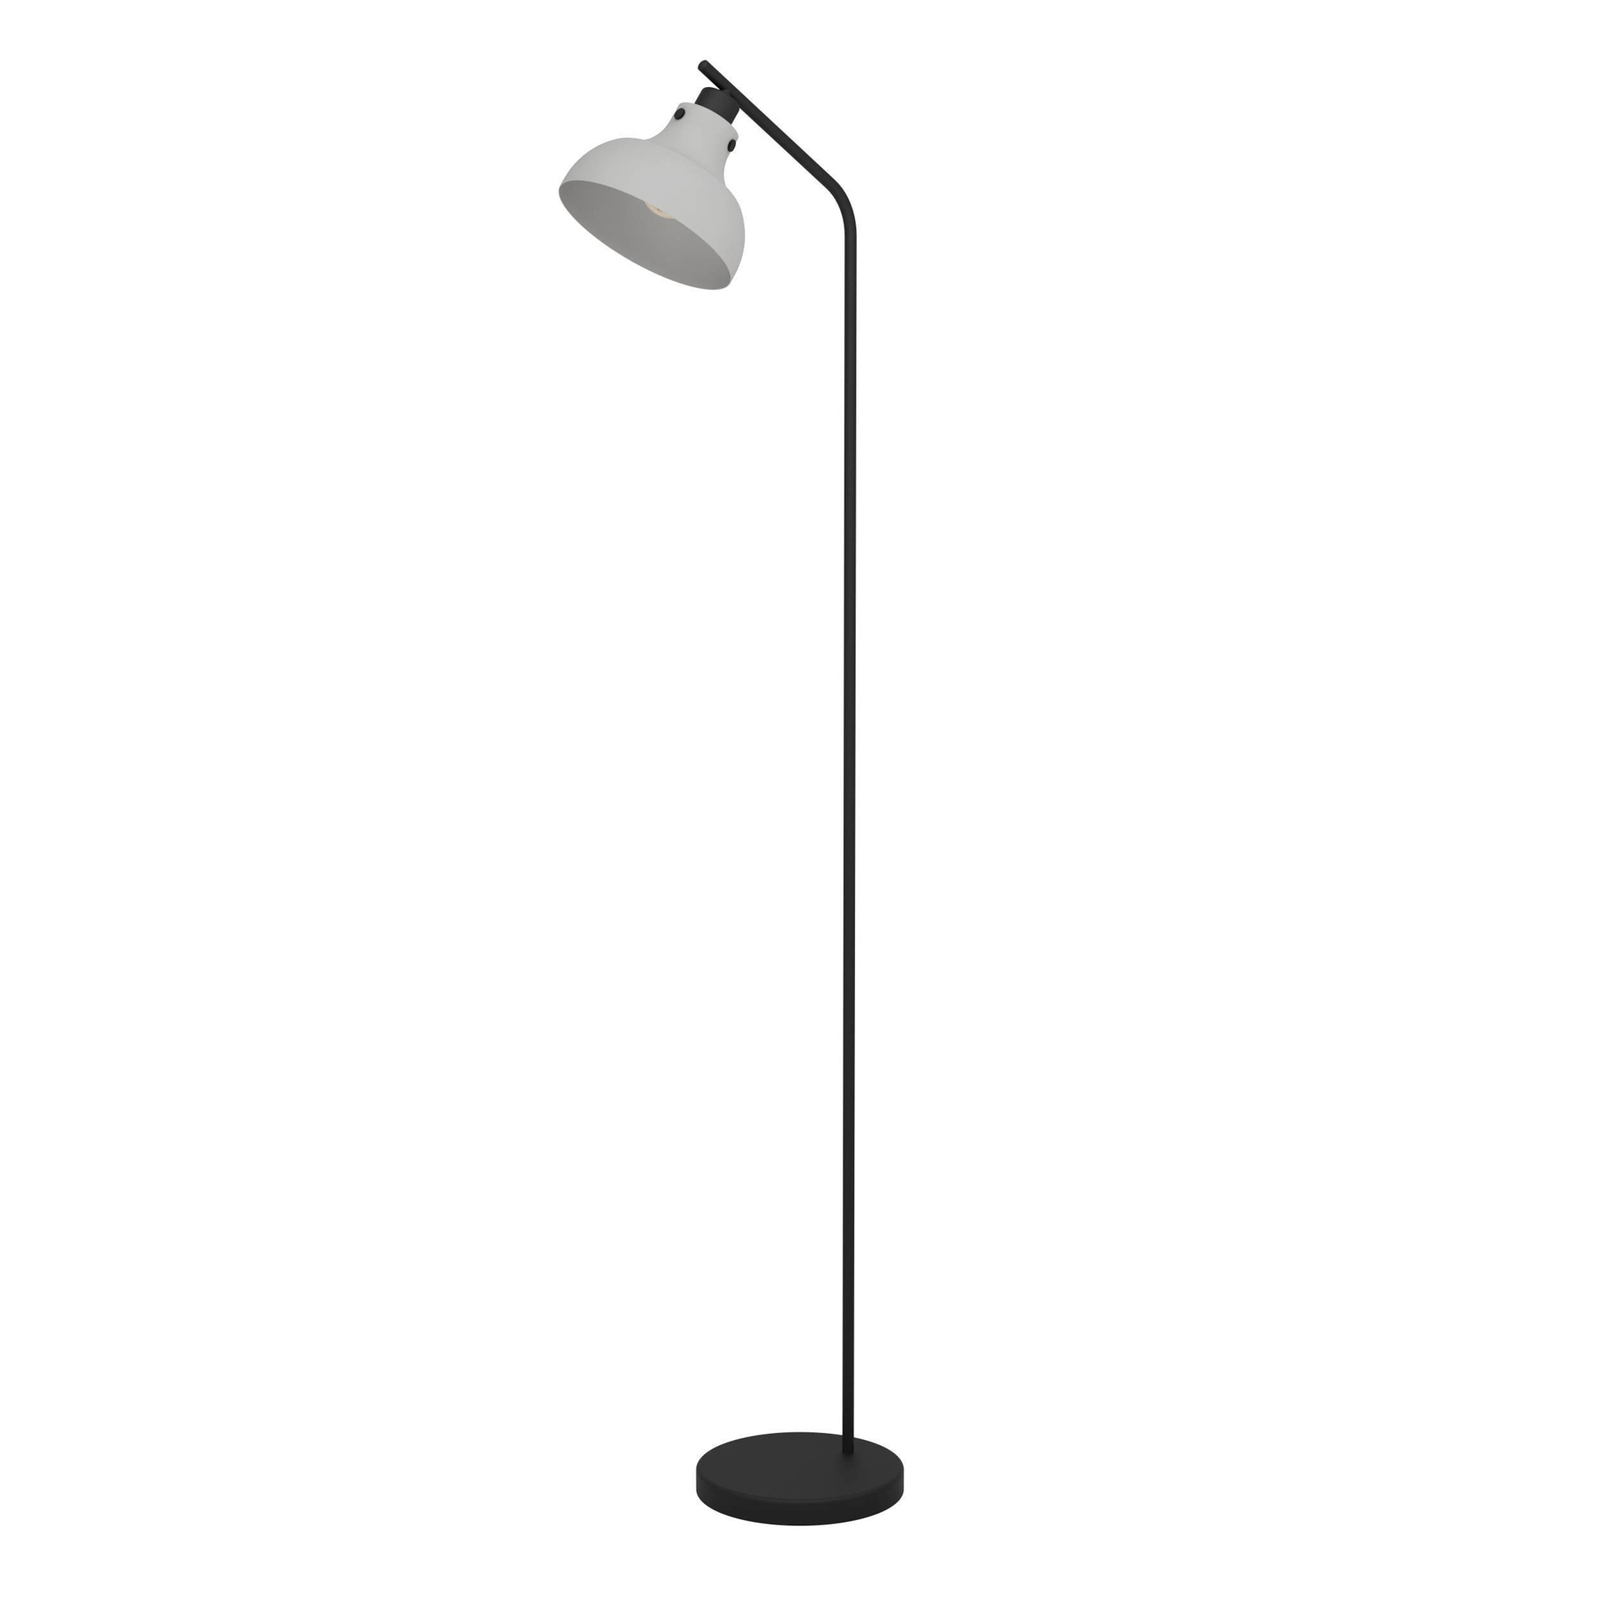 Matlock gulvlampe, høyde 158 cm, grå/svart